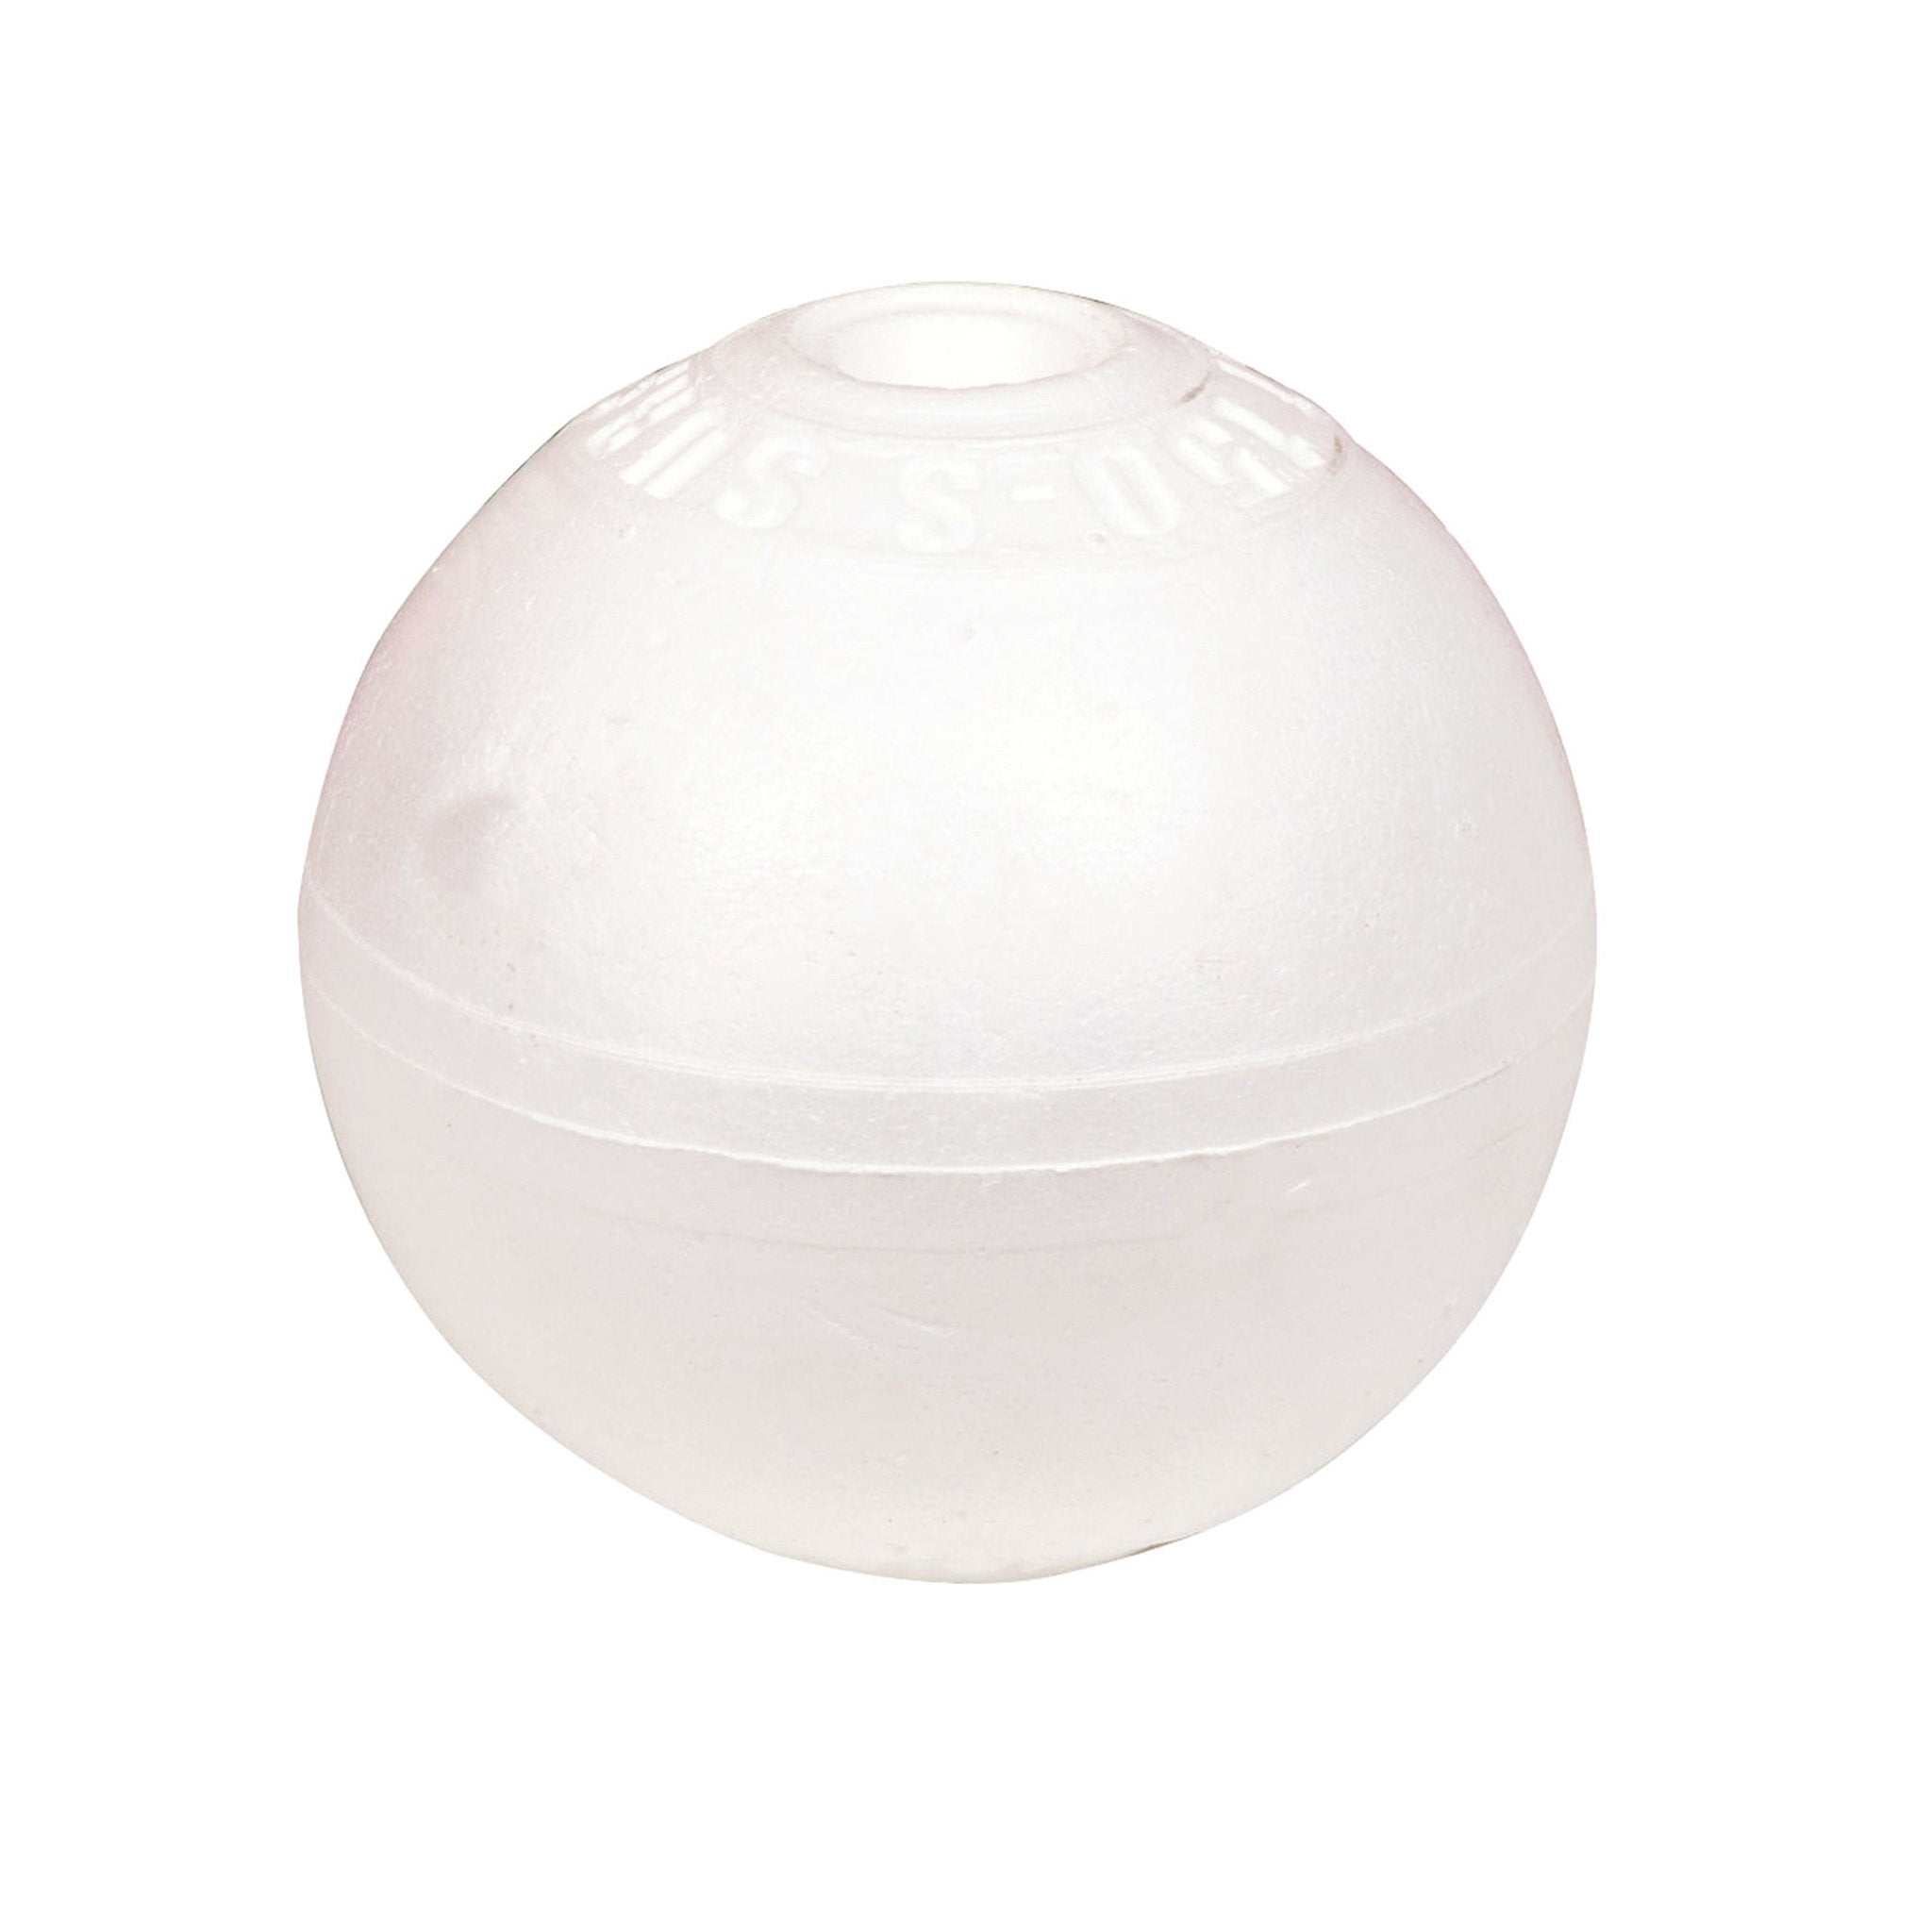 Net Factory Crab Pot Float - 10cm White Polystyrene - Jarvis